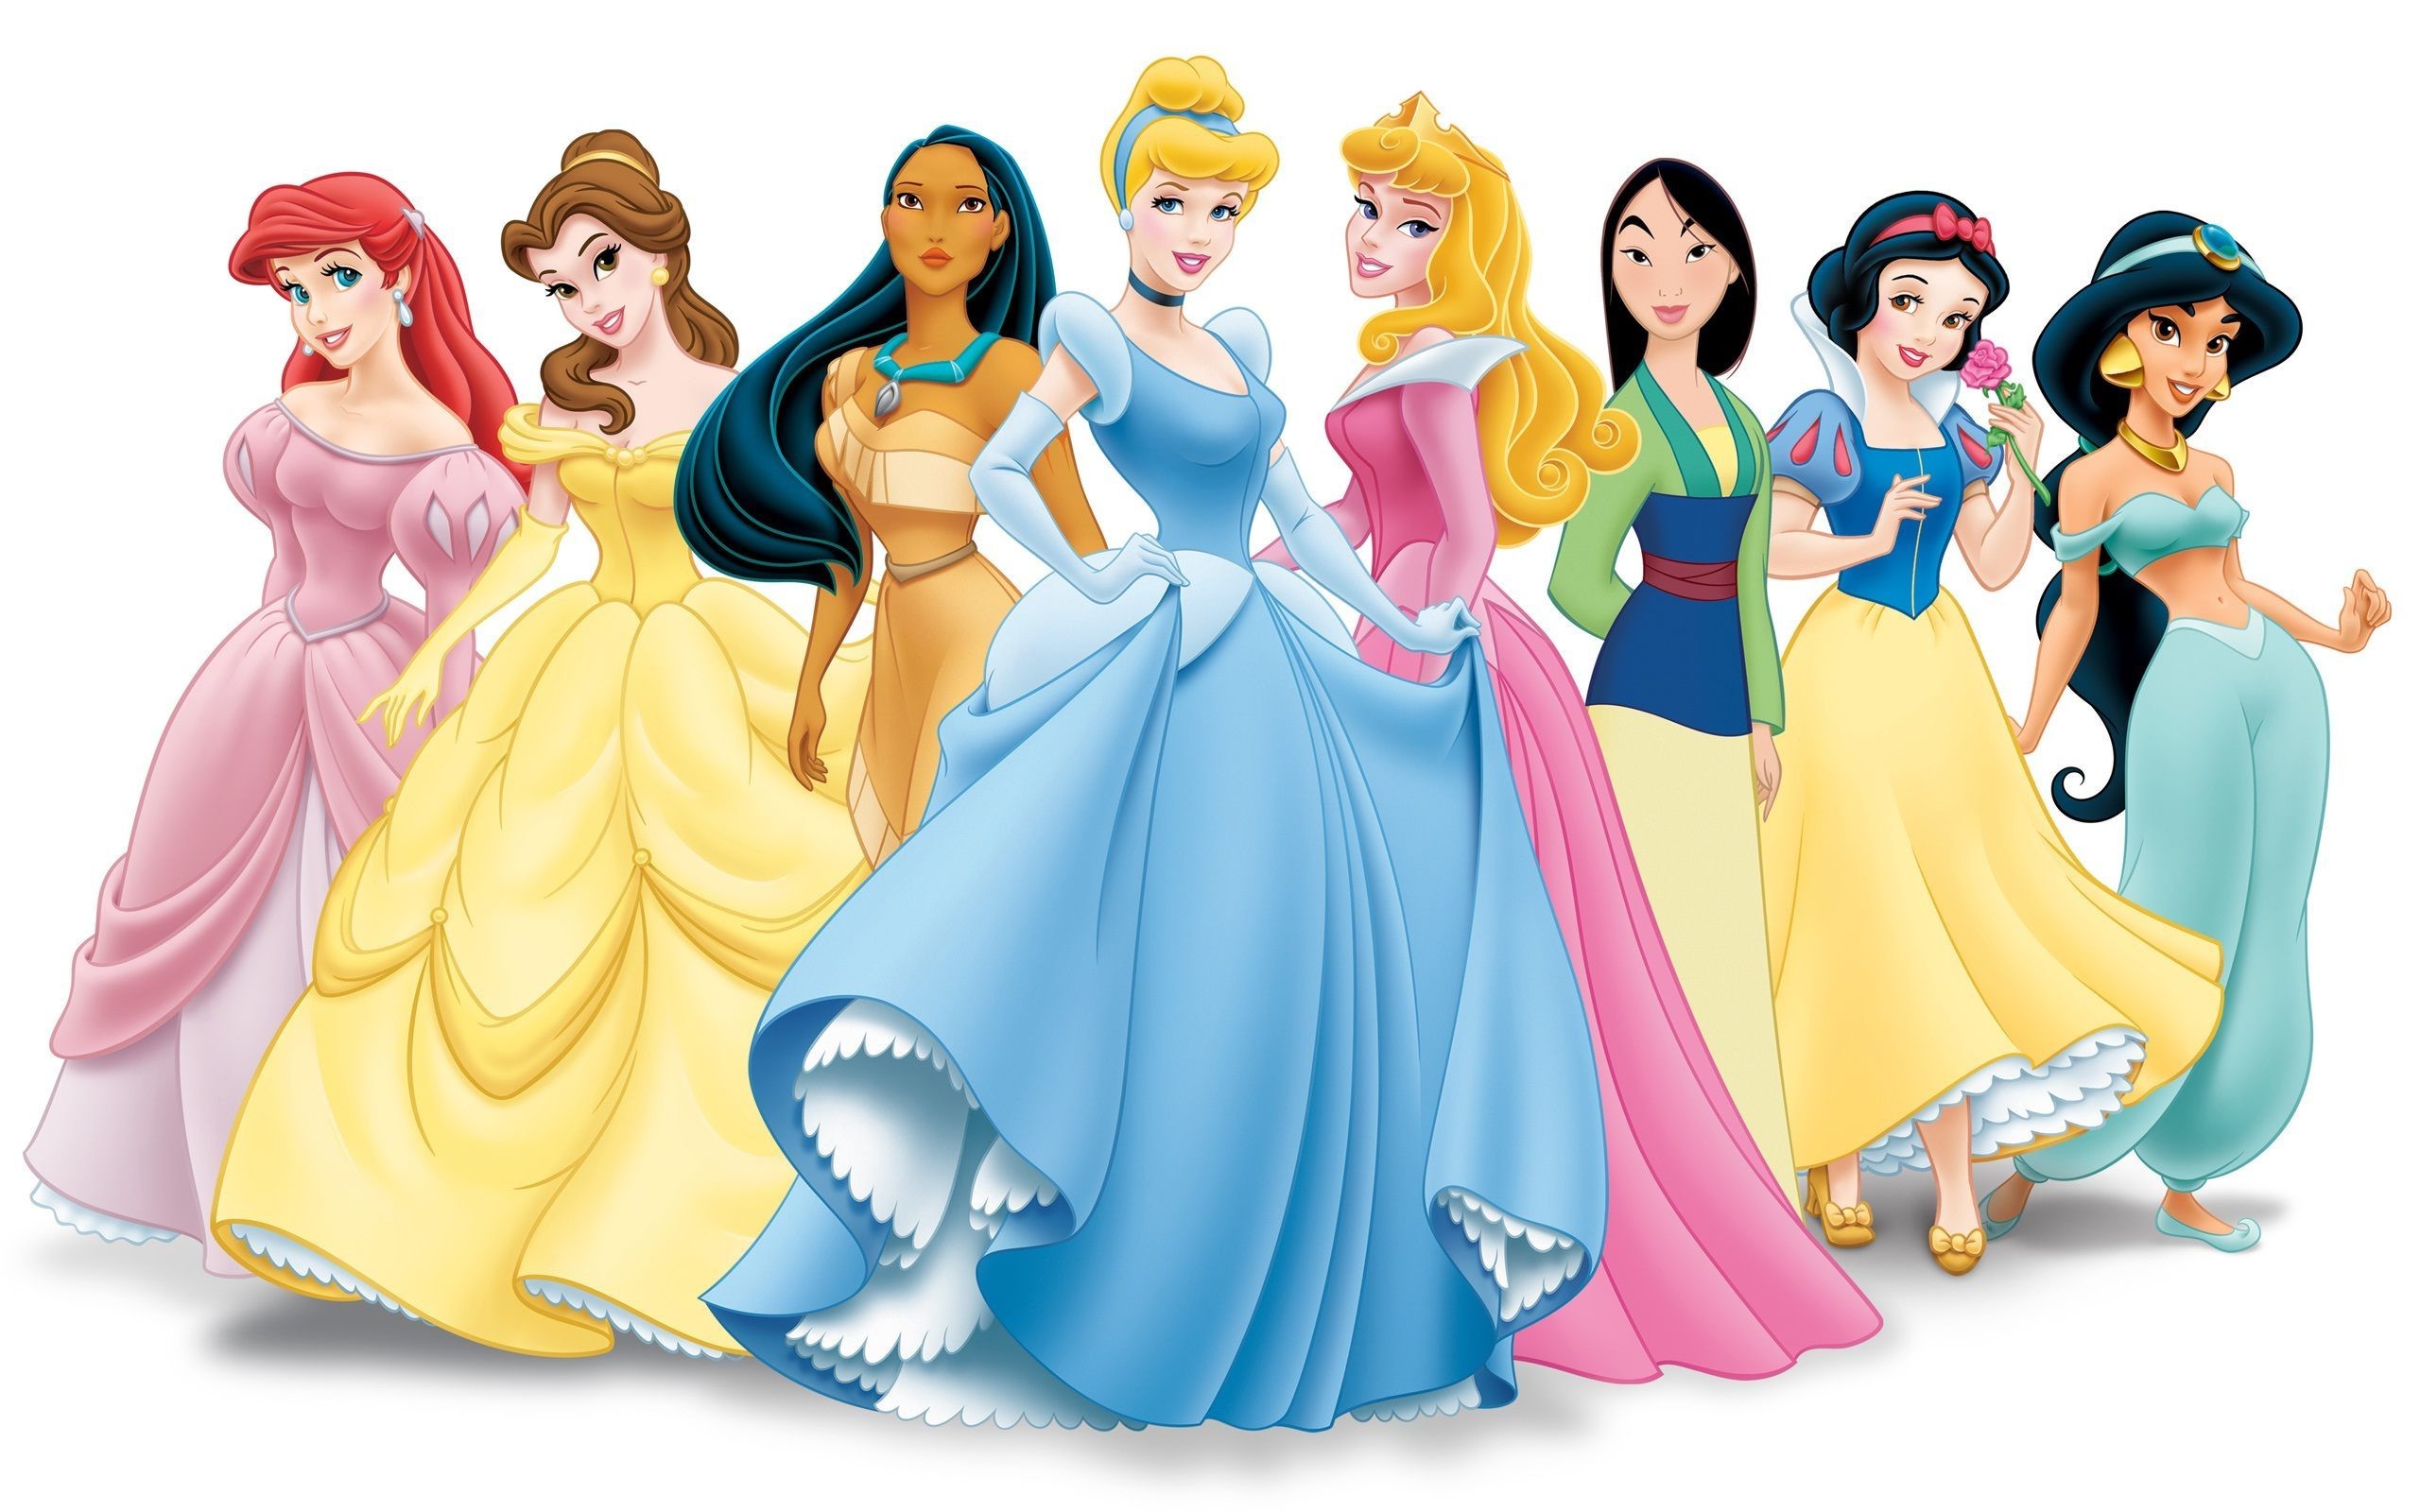 2560x1600 Disney Princess Wallpapers Source Â· Disney Princess Wallpaper Hd  Galleryimage co